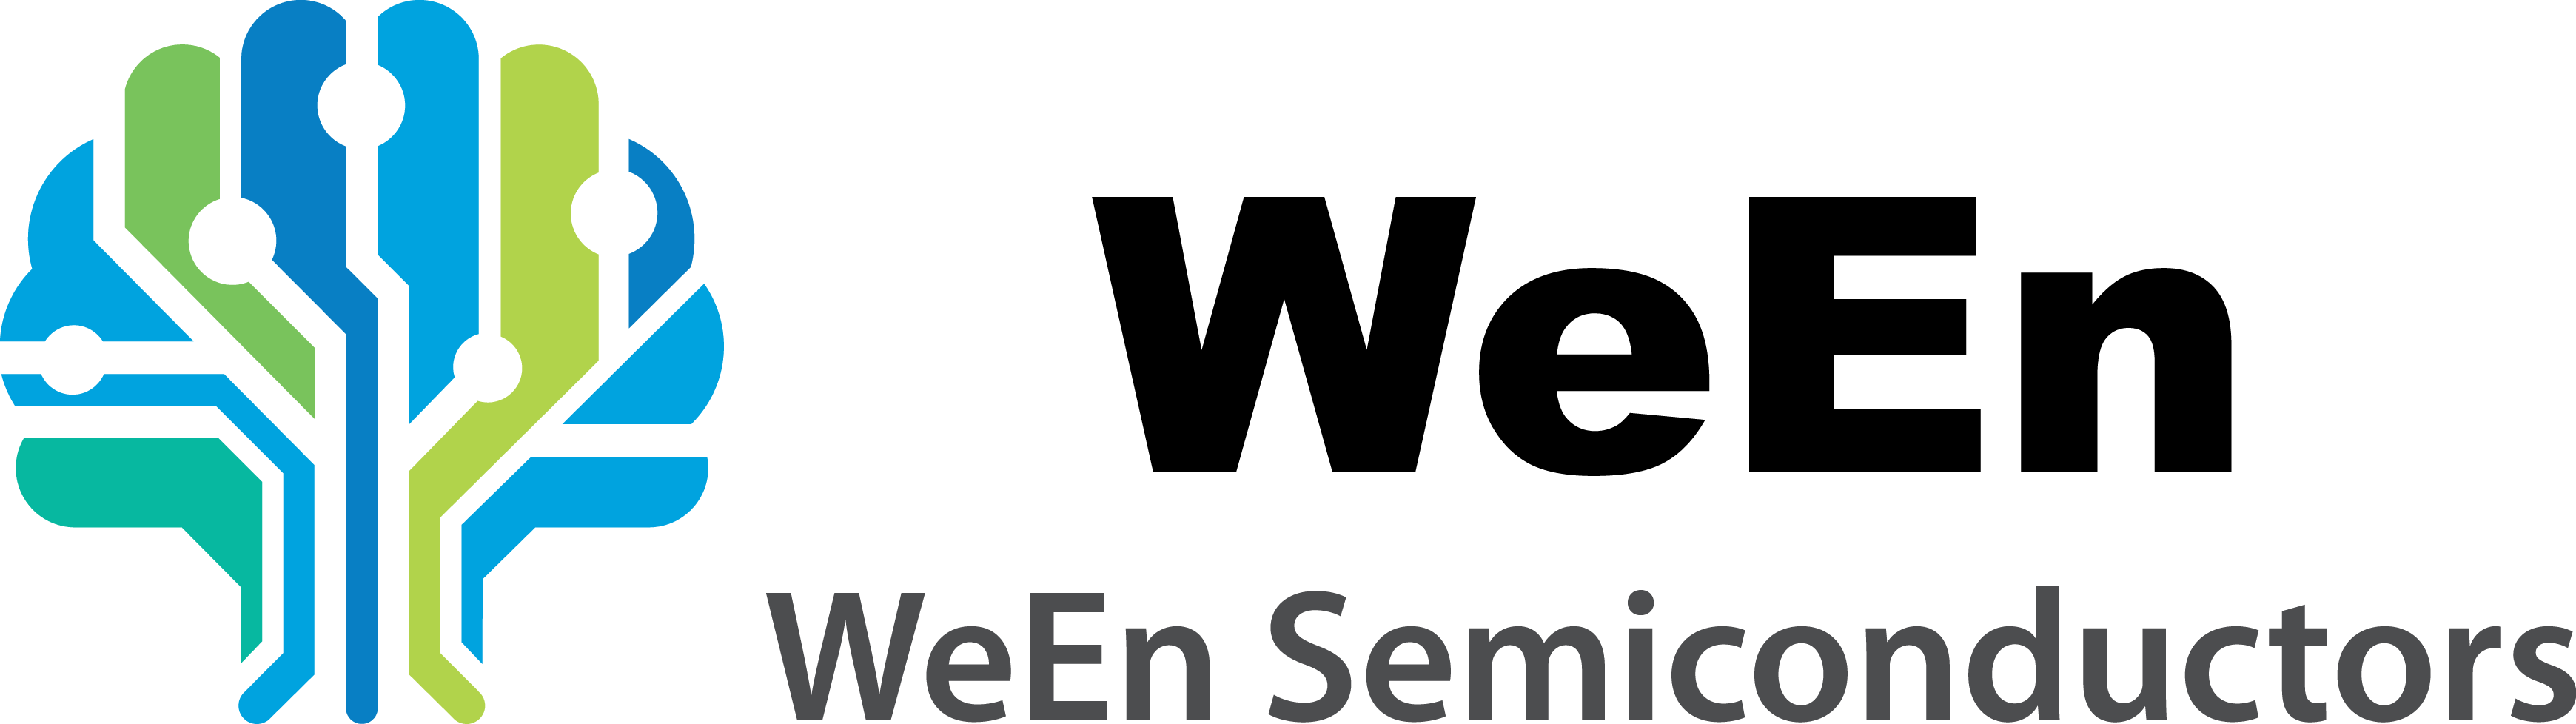 Ween Logo - WeEn Logo